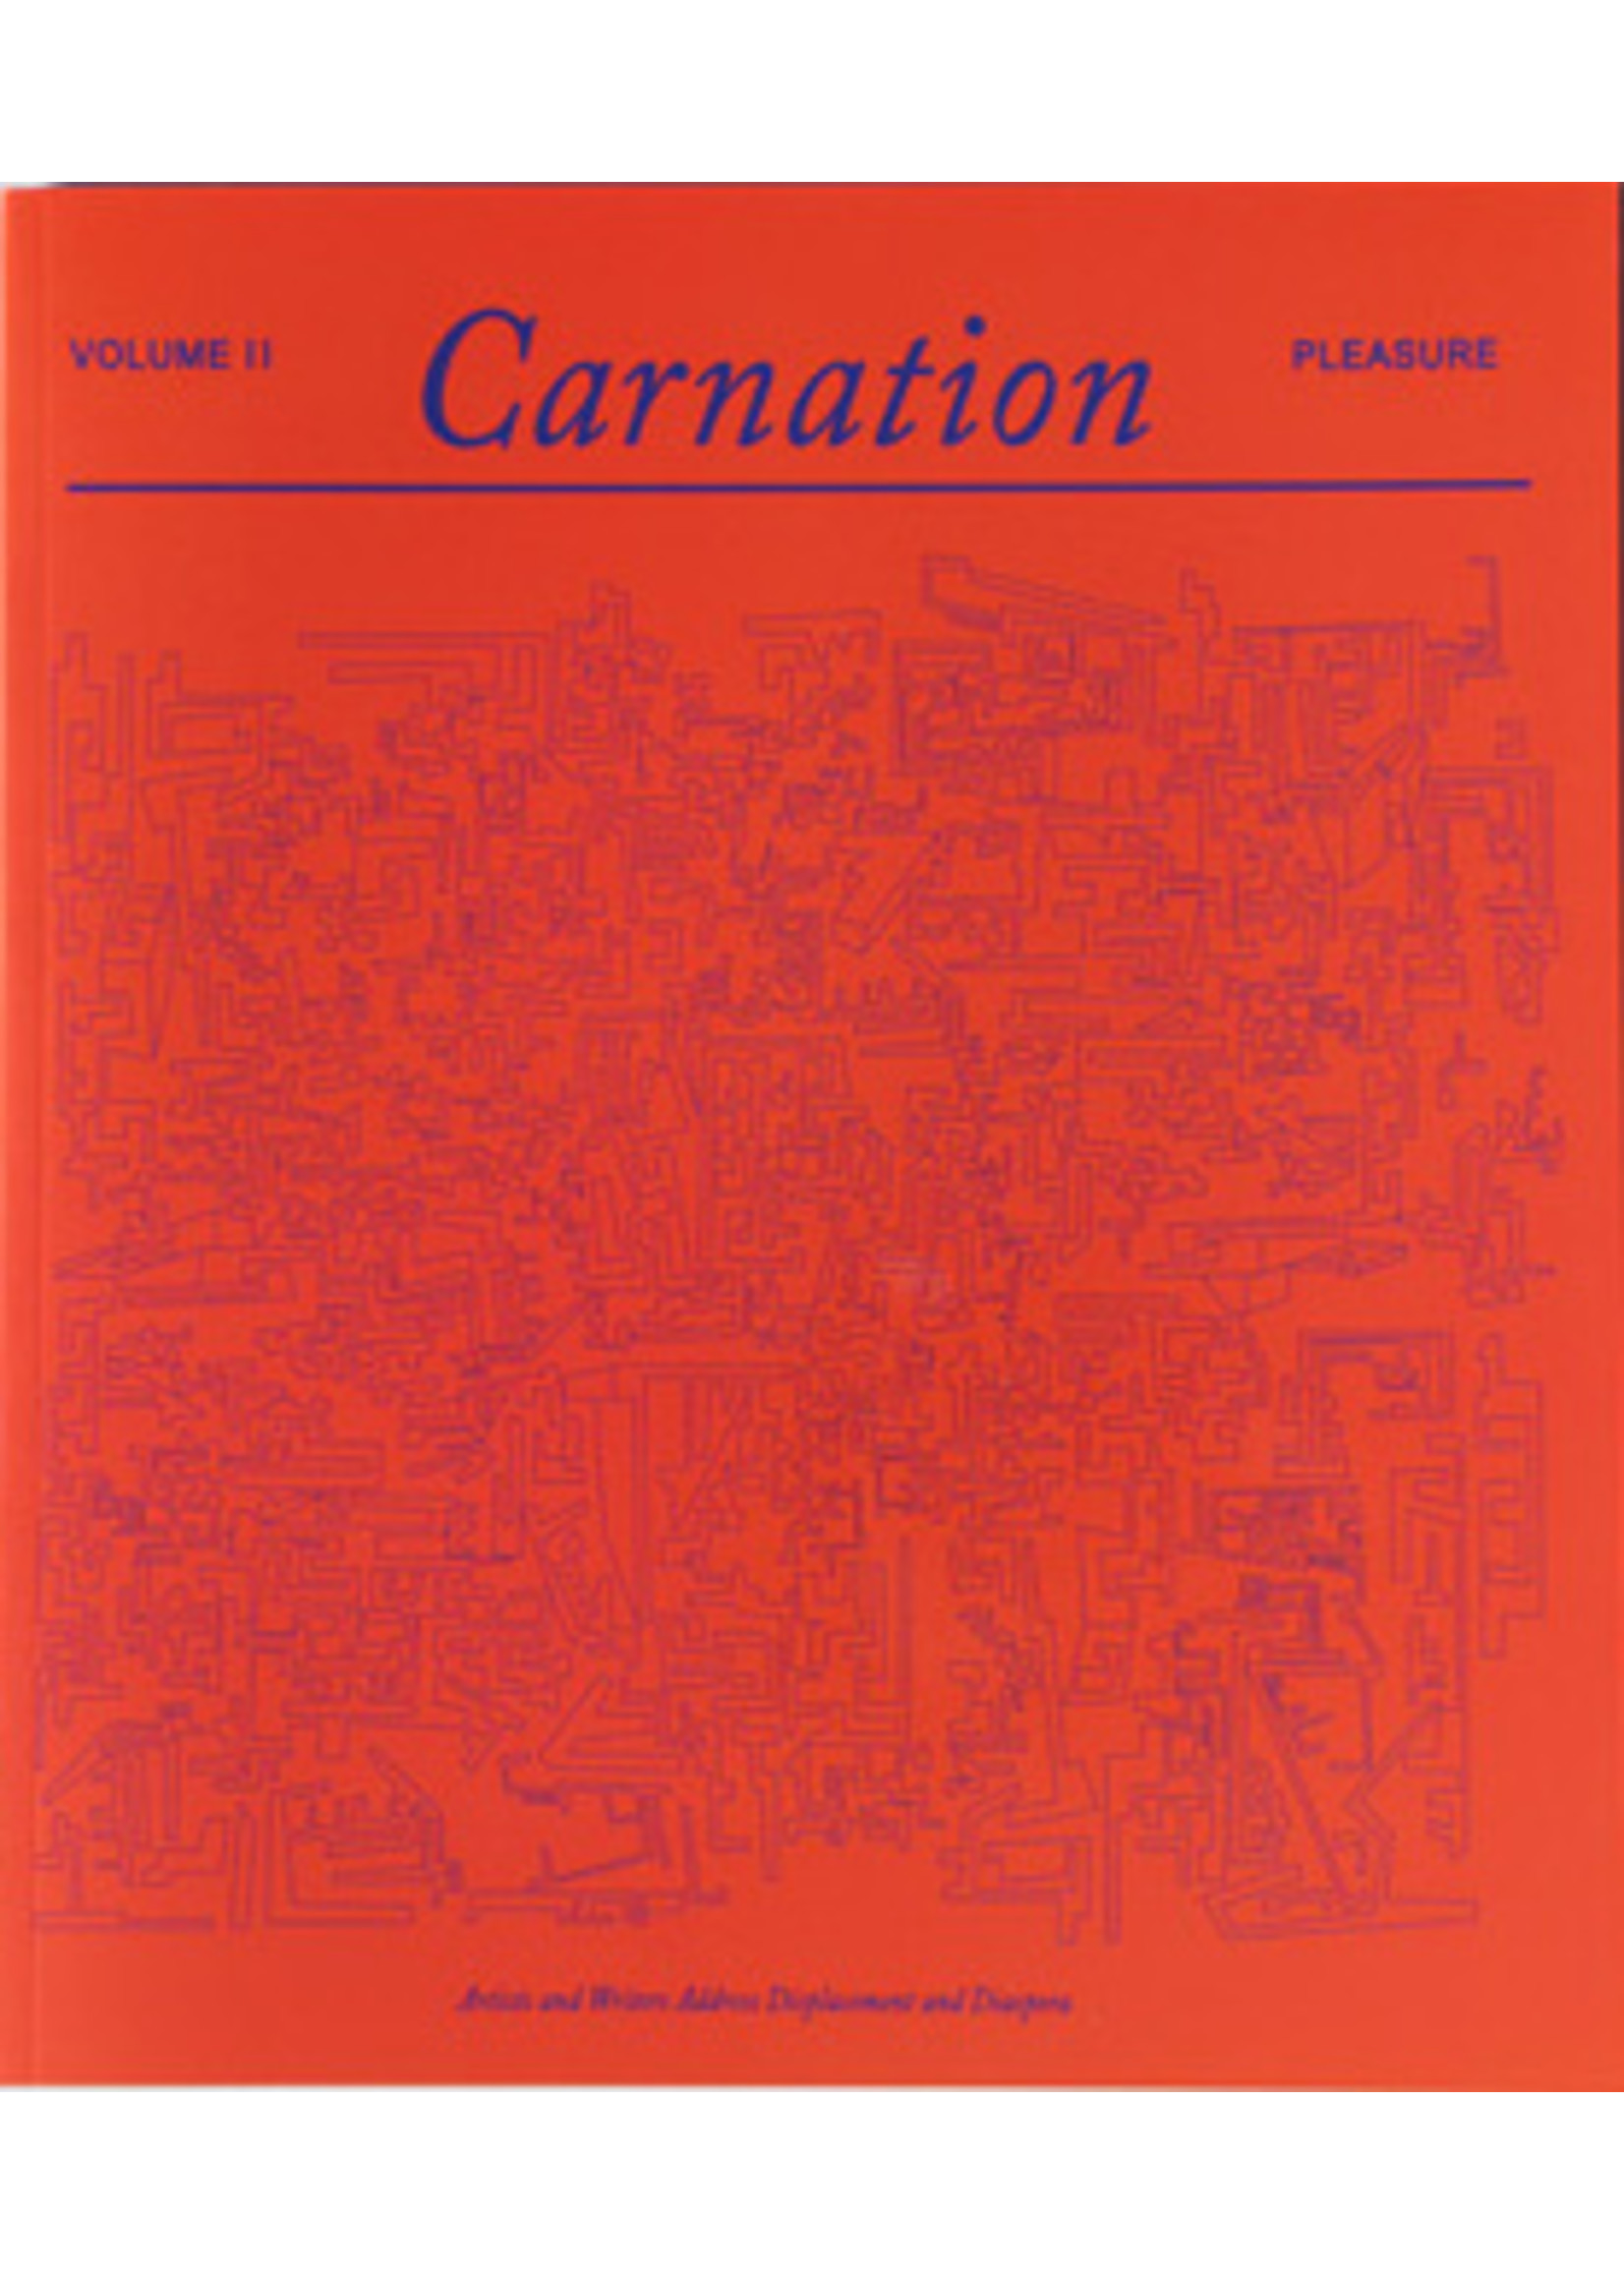 Carnation, Vol 2 (Pleasure)